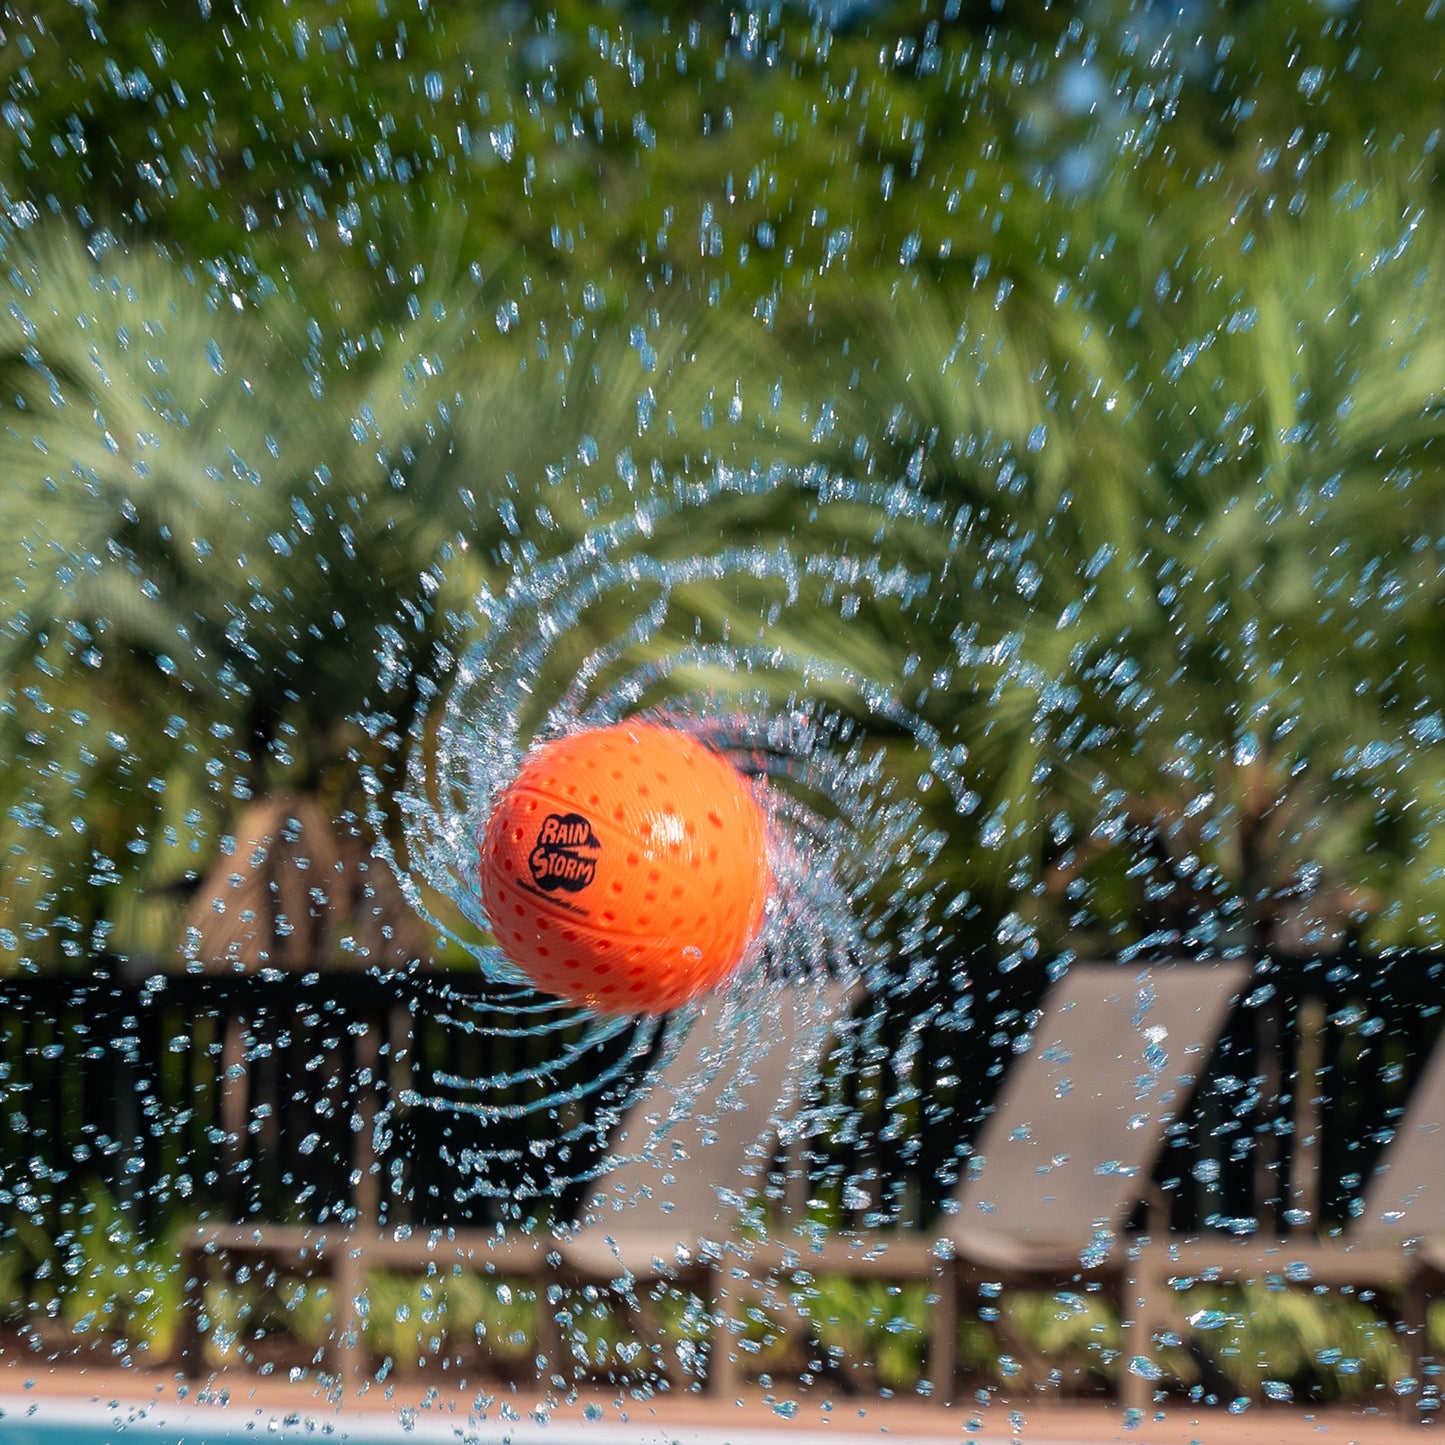 Rainstorm Ball